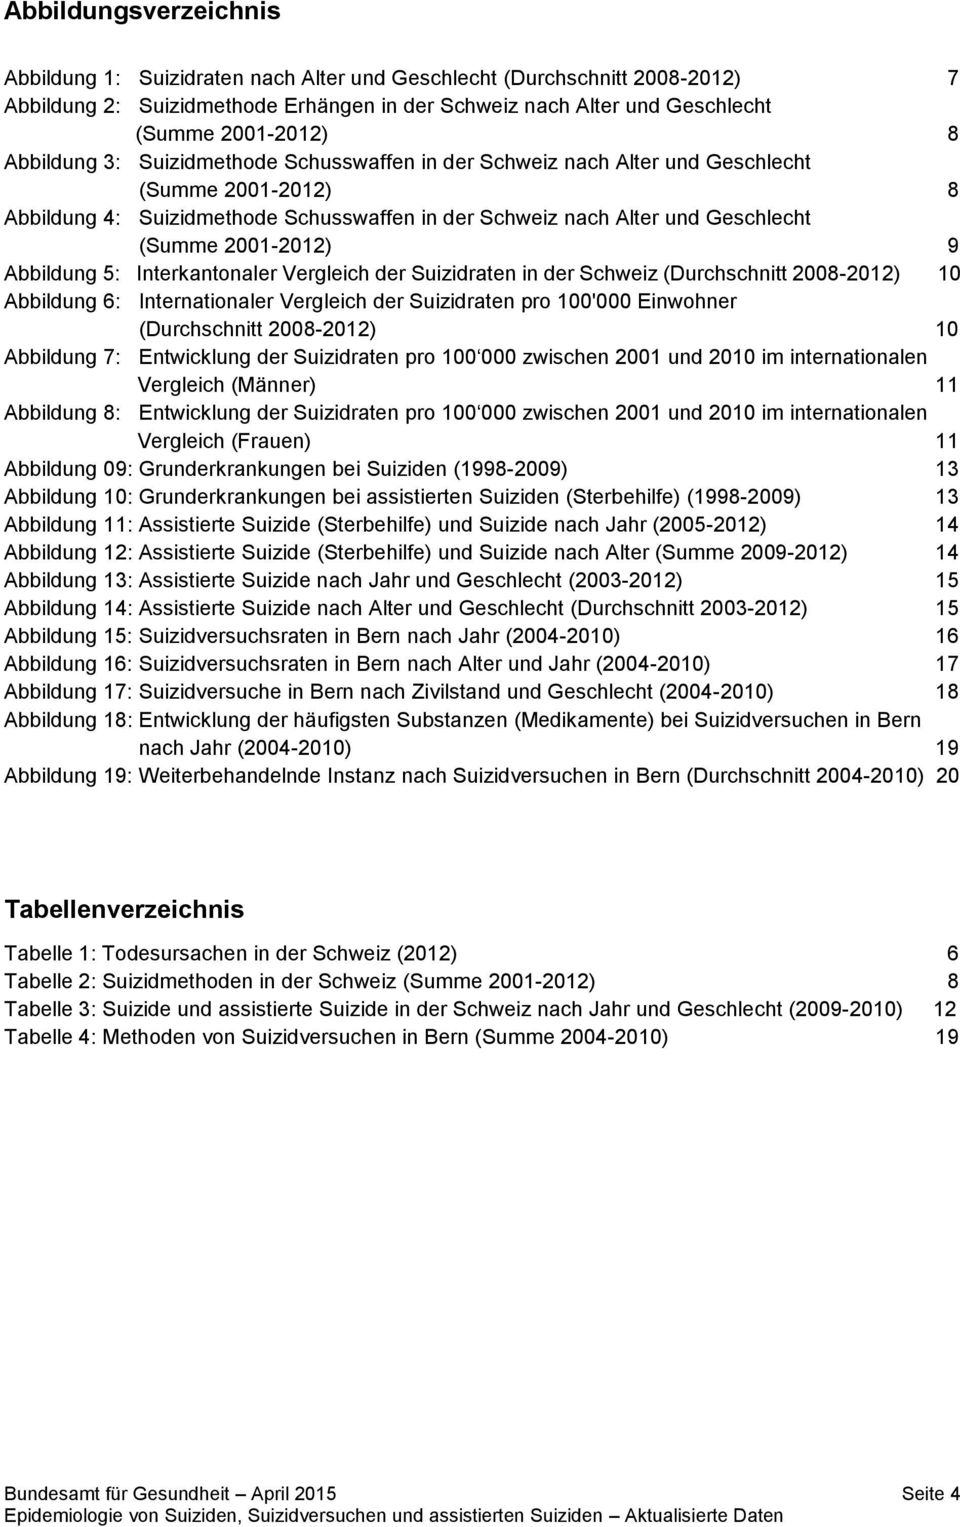 9 Abbildung 5: Interkantonaler Vergleich der Suizidraten in der Schweiz (Durchschnitt 2008-2012) 10 Abbildung 6: Internationaler Vergleich der Suizidraten pro 100'000 Einwohner (Durchschnitt